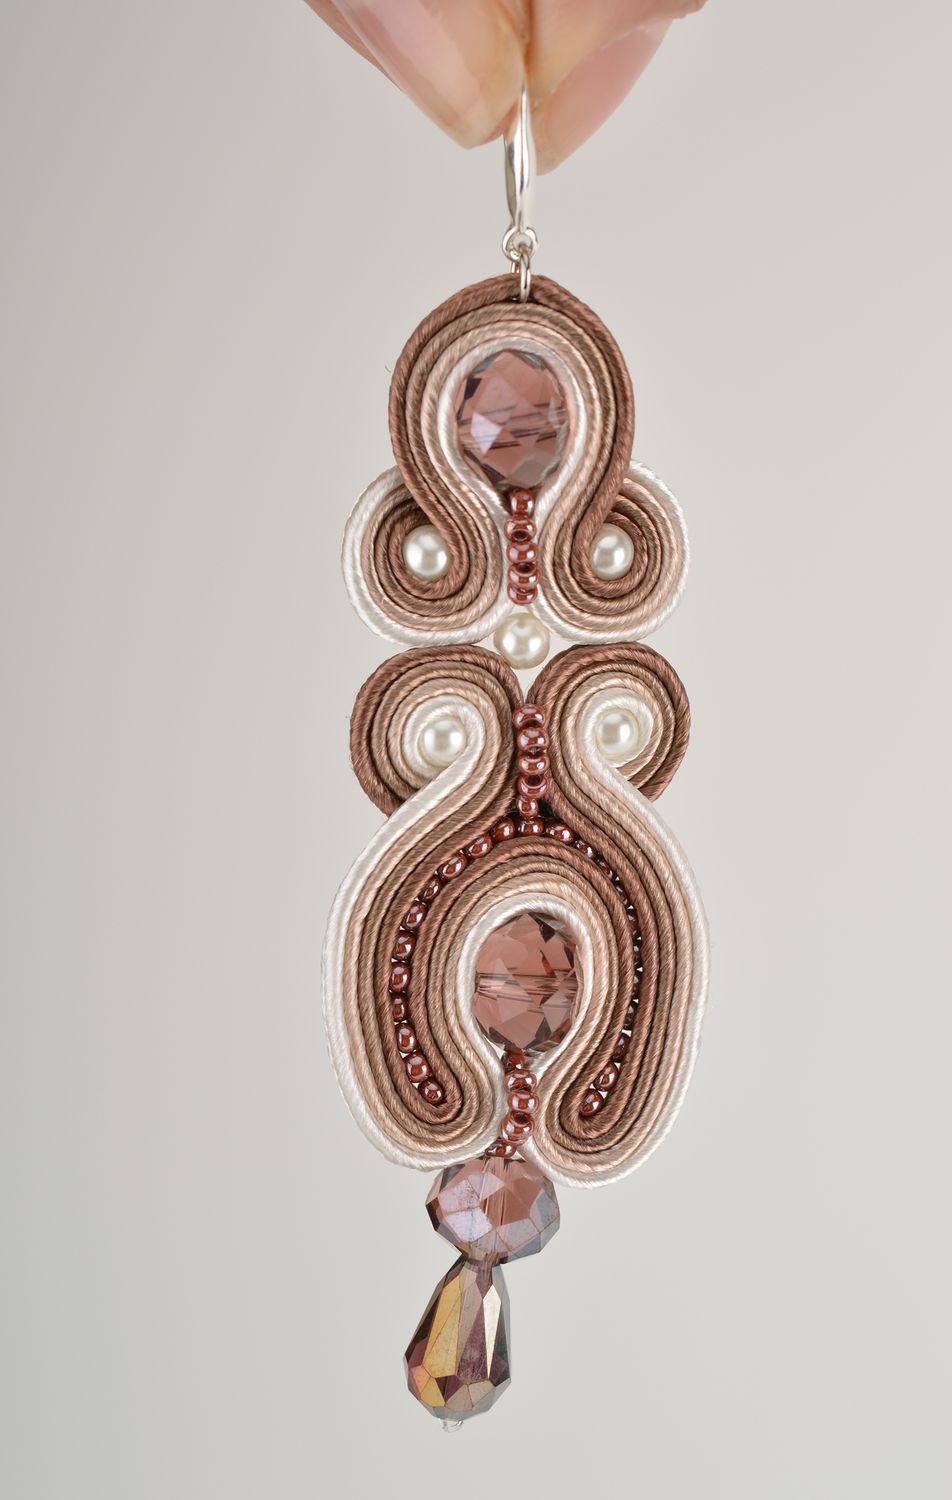 Handmade massive beige bracelet and earrings created using soutache technique photo 3